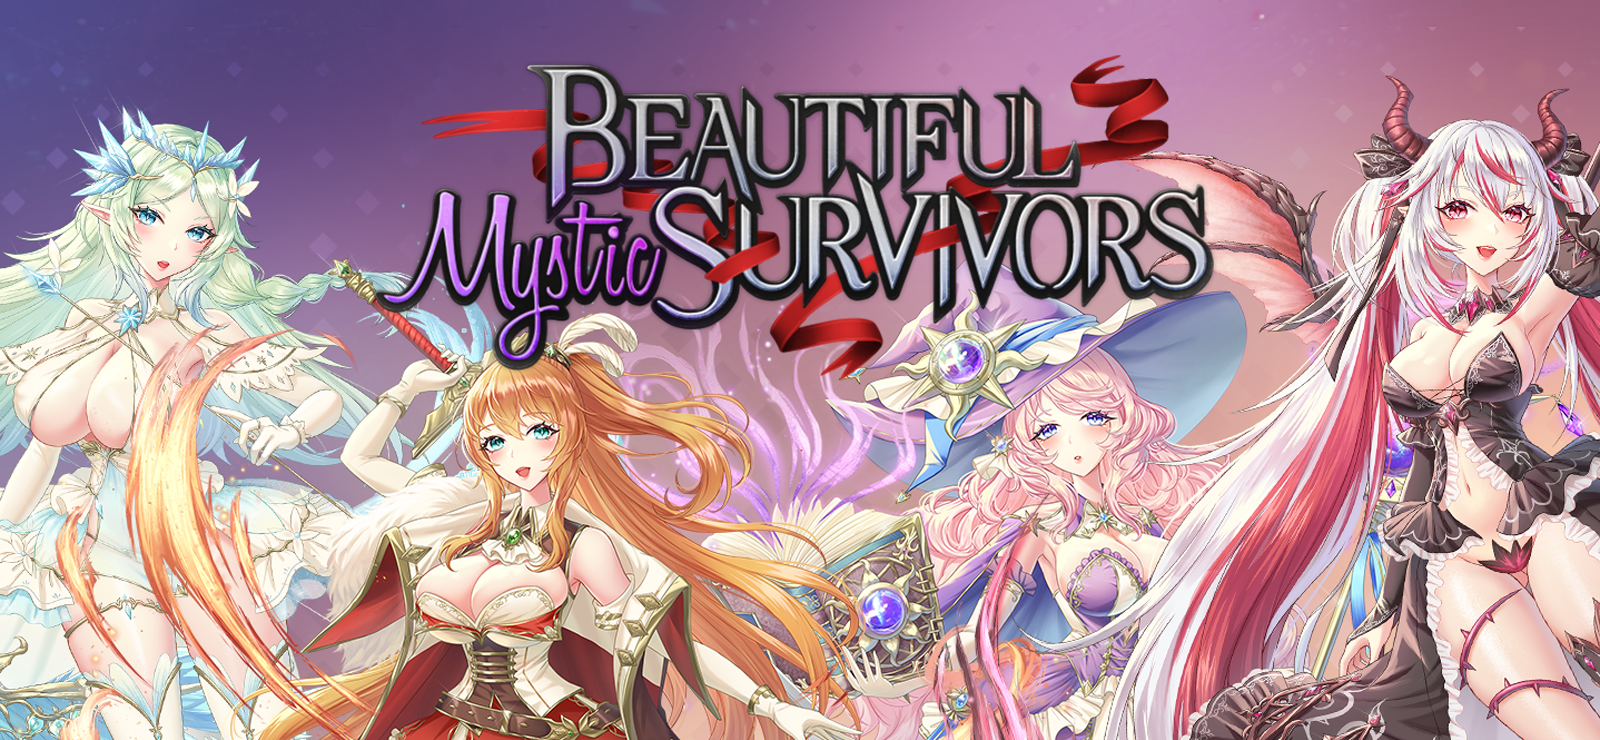 Beautiful Mystic Survivors